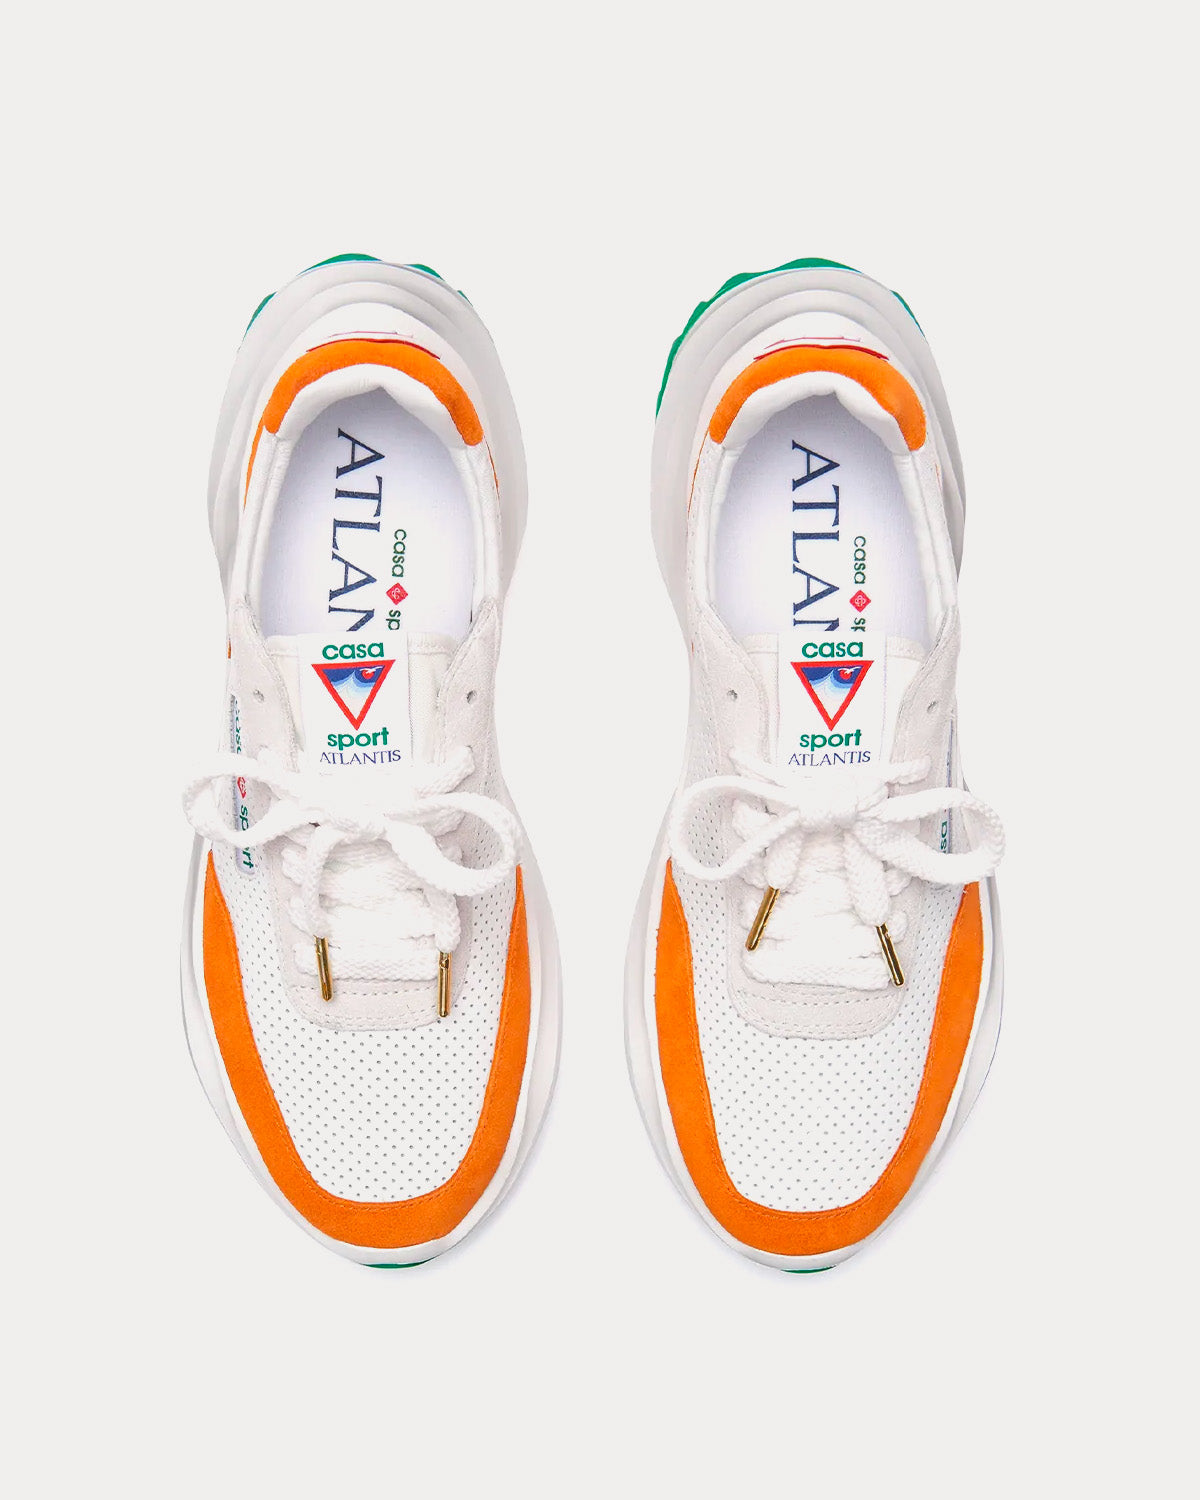 Casablanca - Atlantis White / Clay Orange Low Top Sneakers